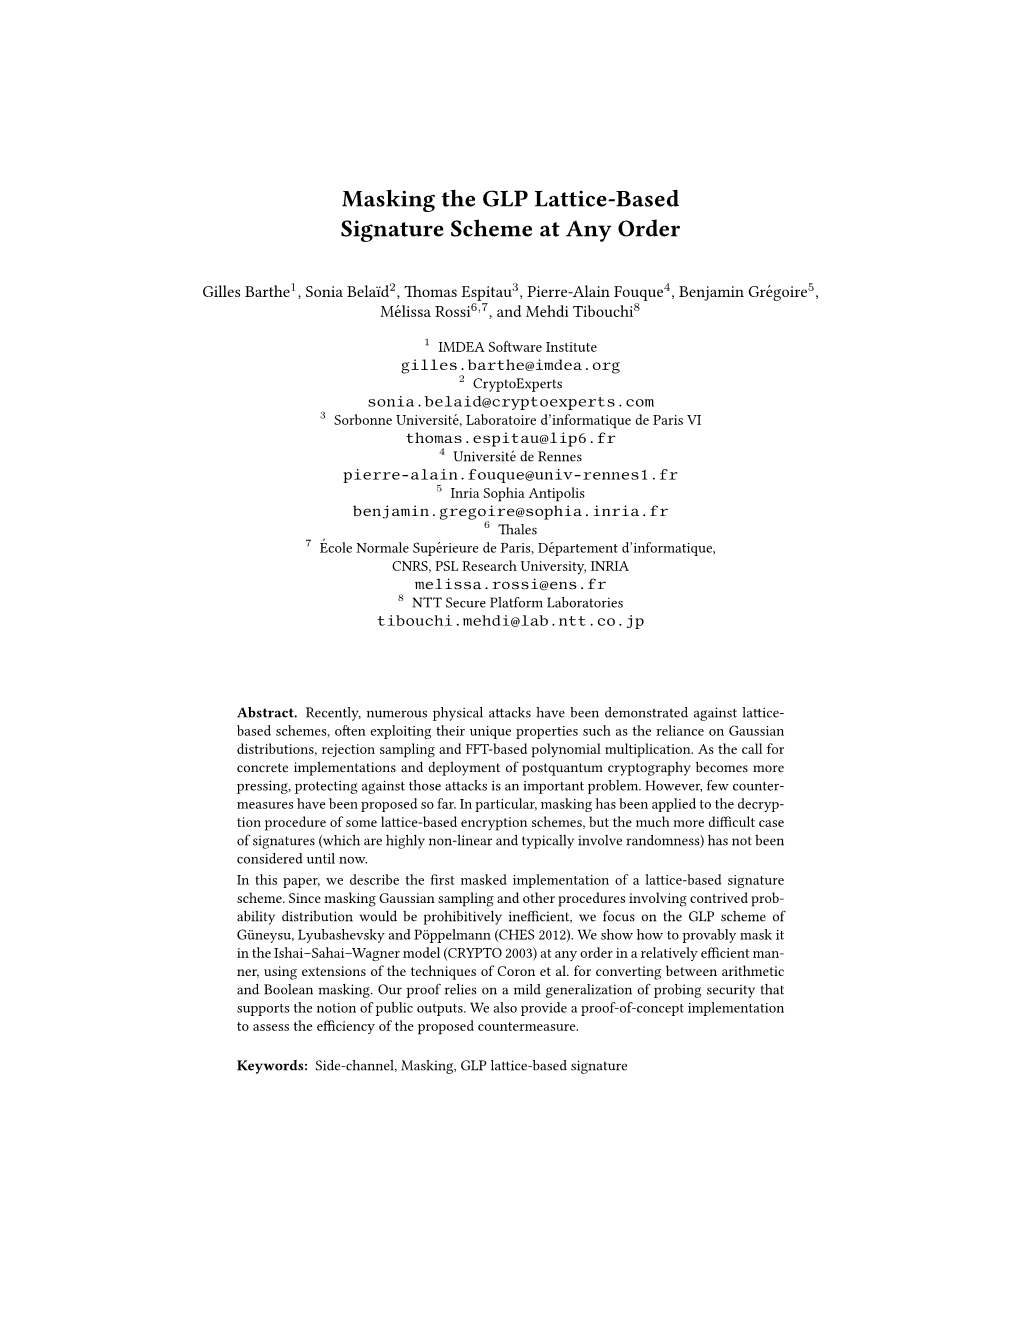 Masking the GLP Lattice-Based Signature Scheme at Any Order